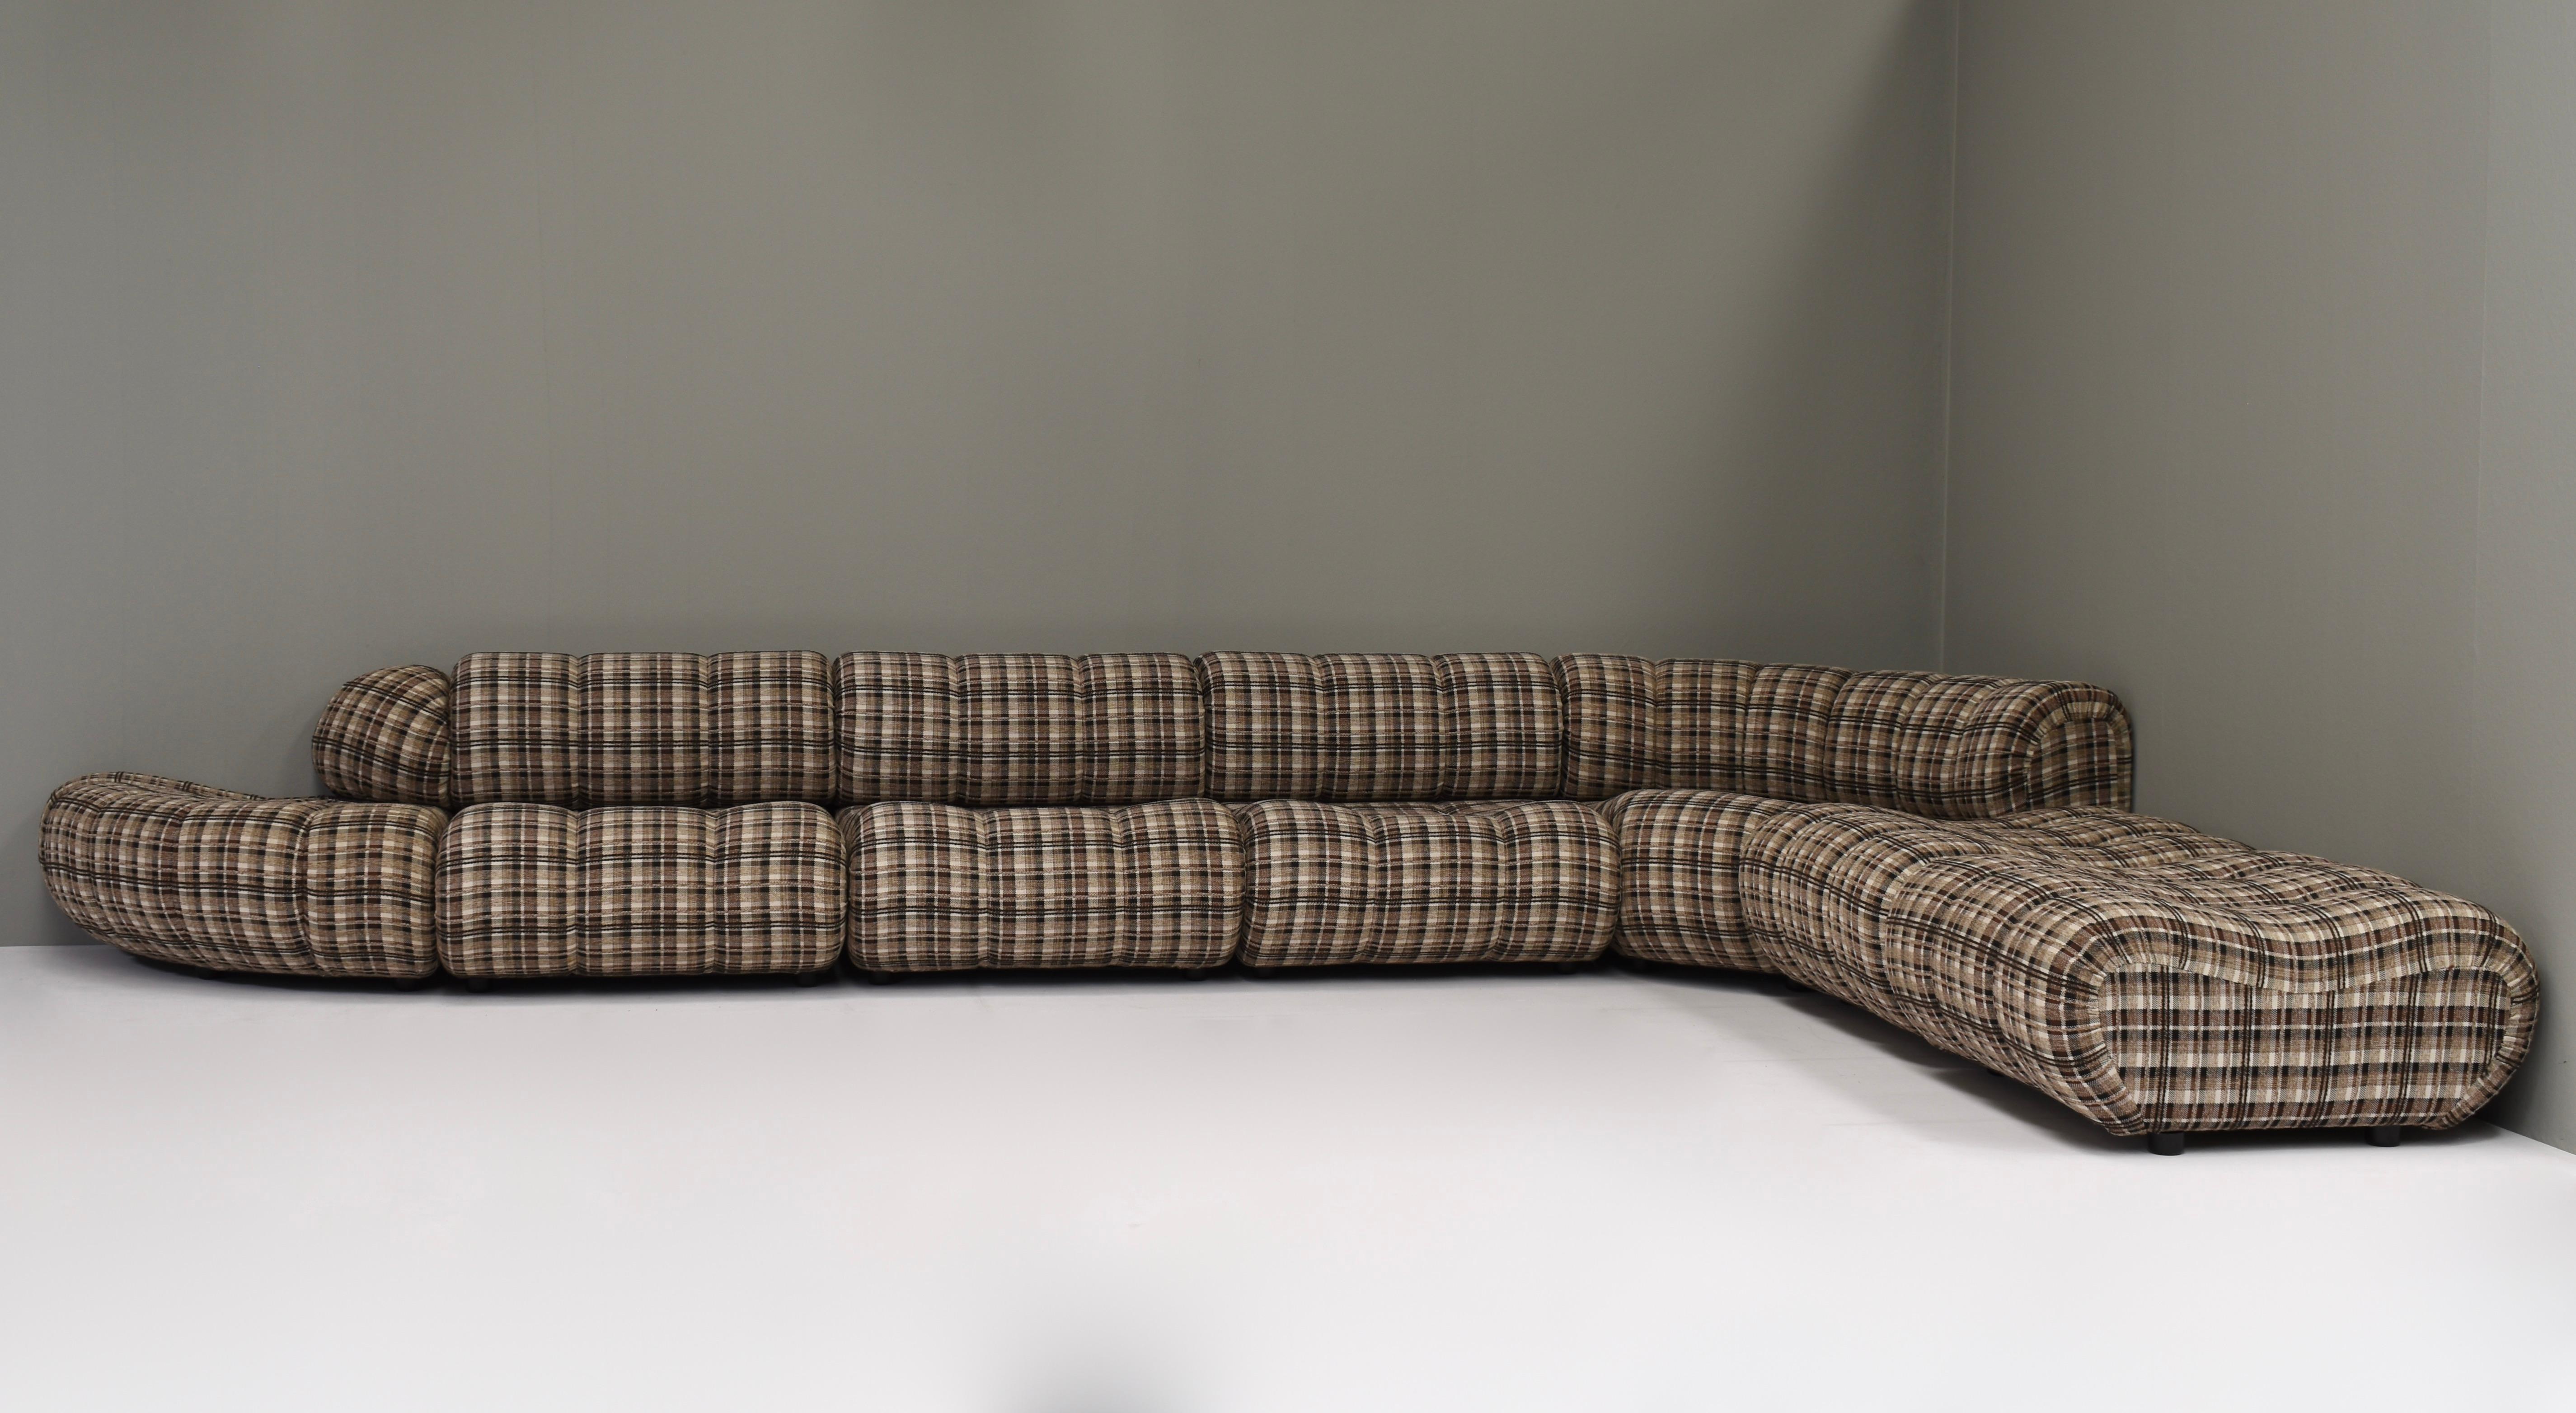 Fabric Giuseppe Munari Channeled Sectional Sofa by Poltrona Munari, Italy, circa 1970 For Sale